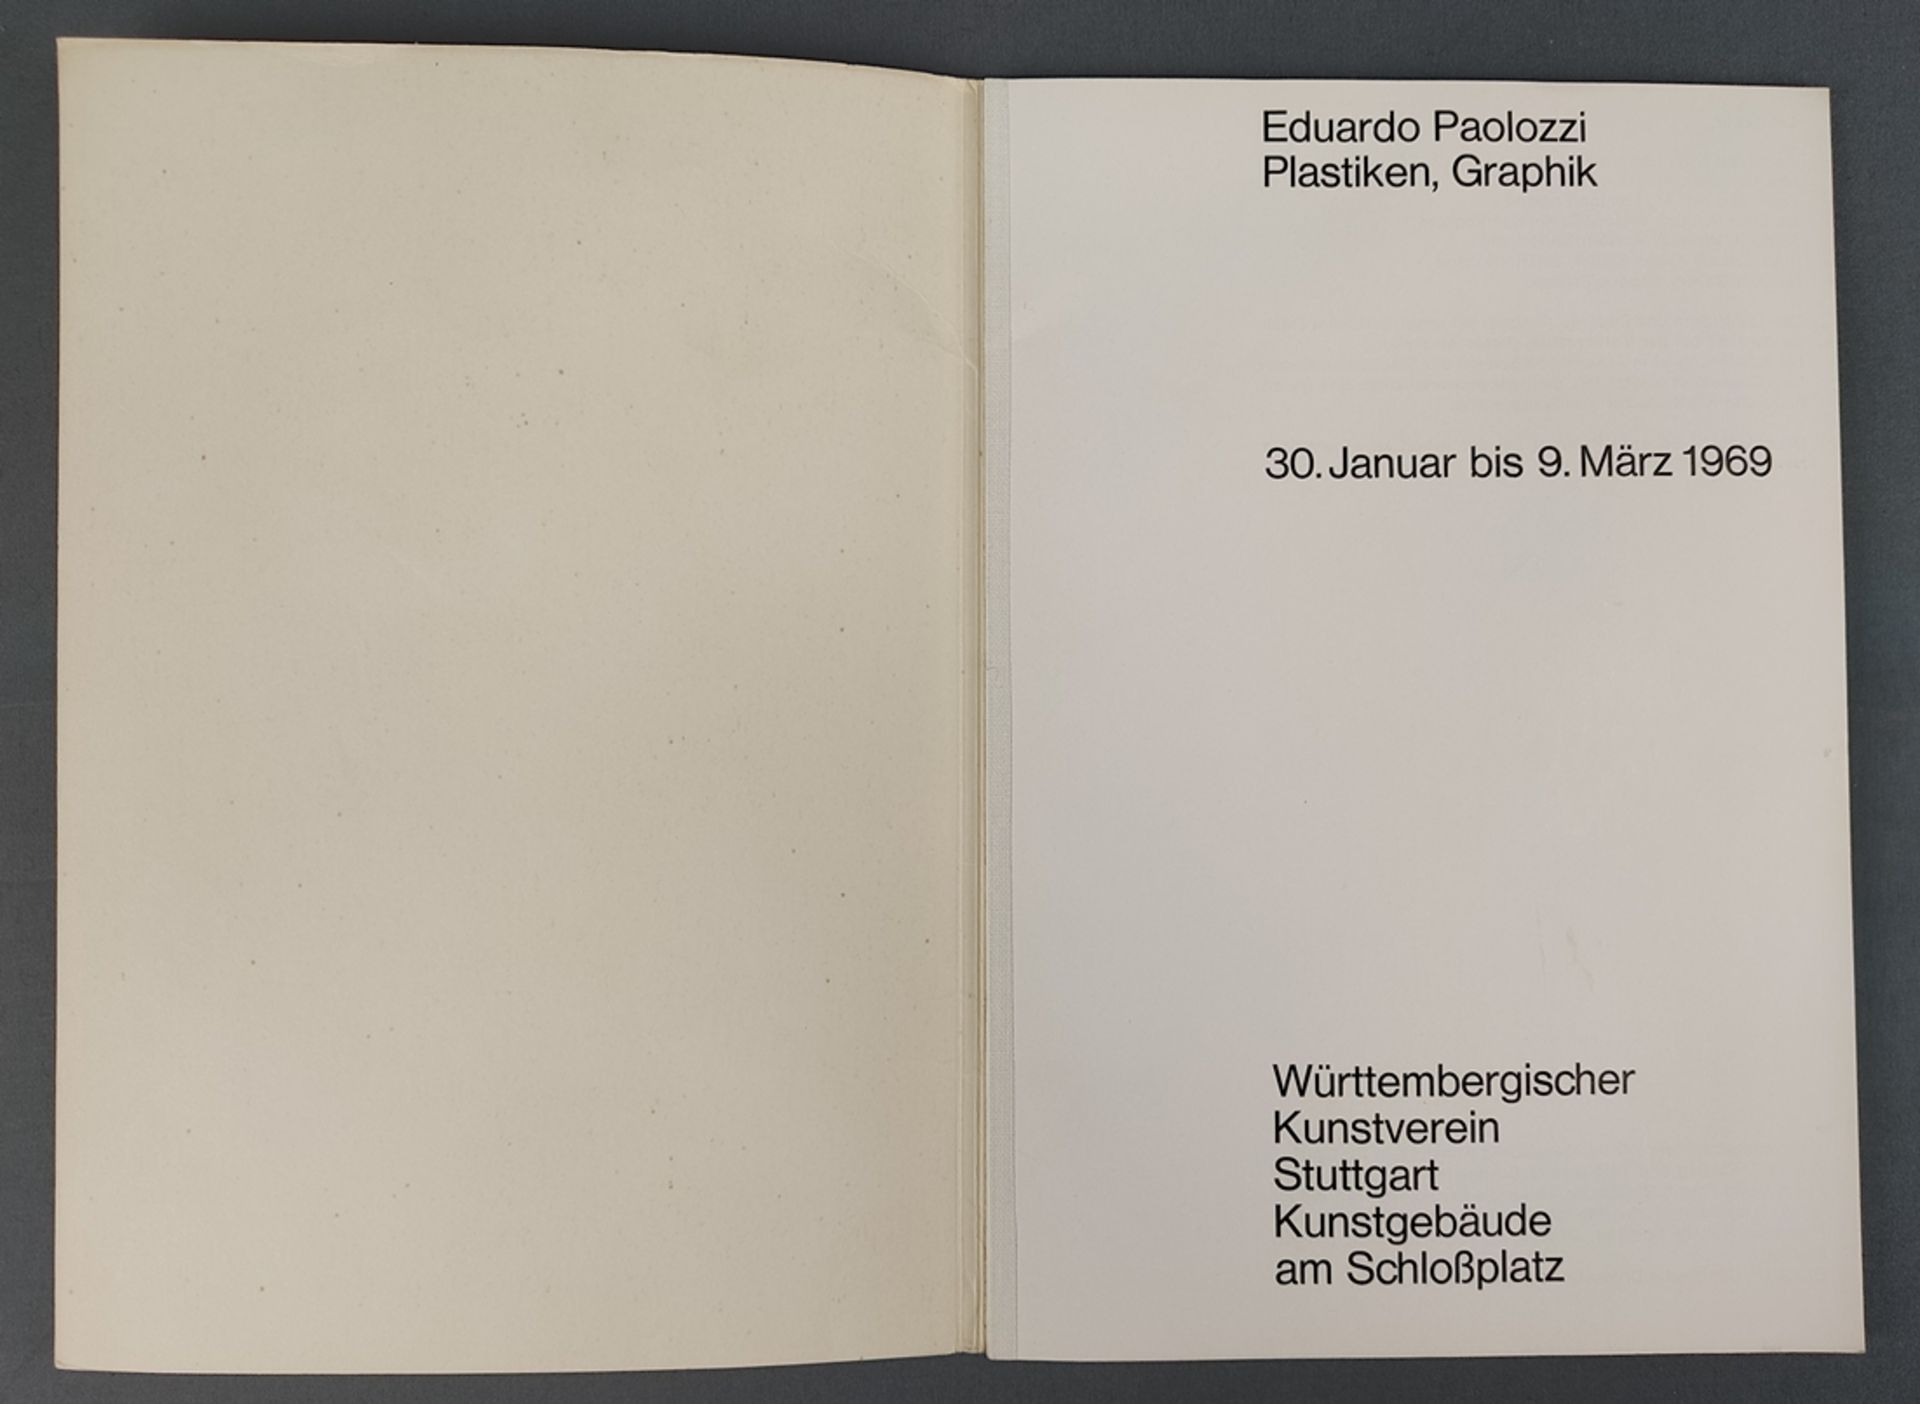 Paolozzi, Eduardo "Sculptures, Graphics", 8°, 53 pages, exhibition catalog Württembergischer Kunstv - Image 2 of 3